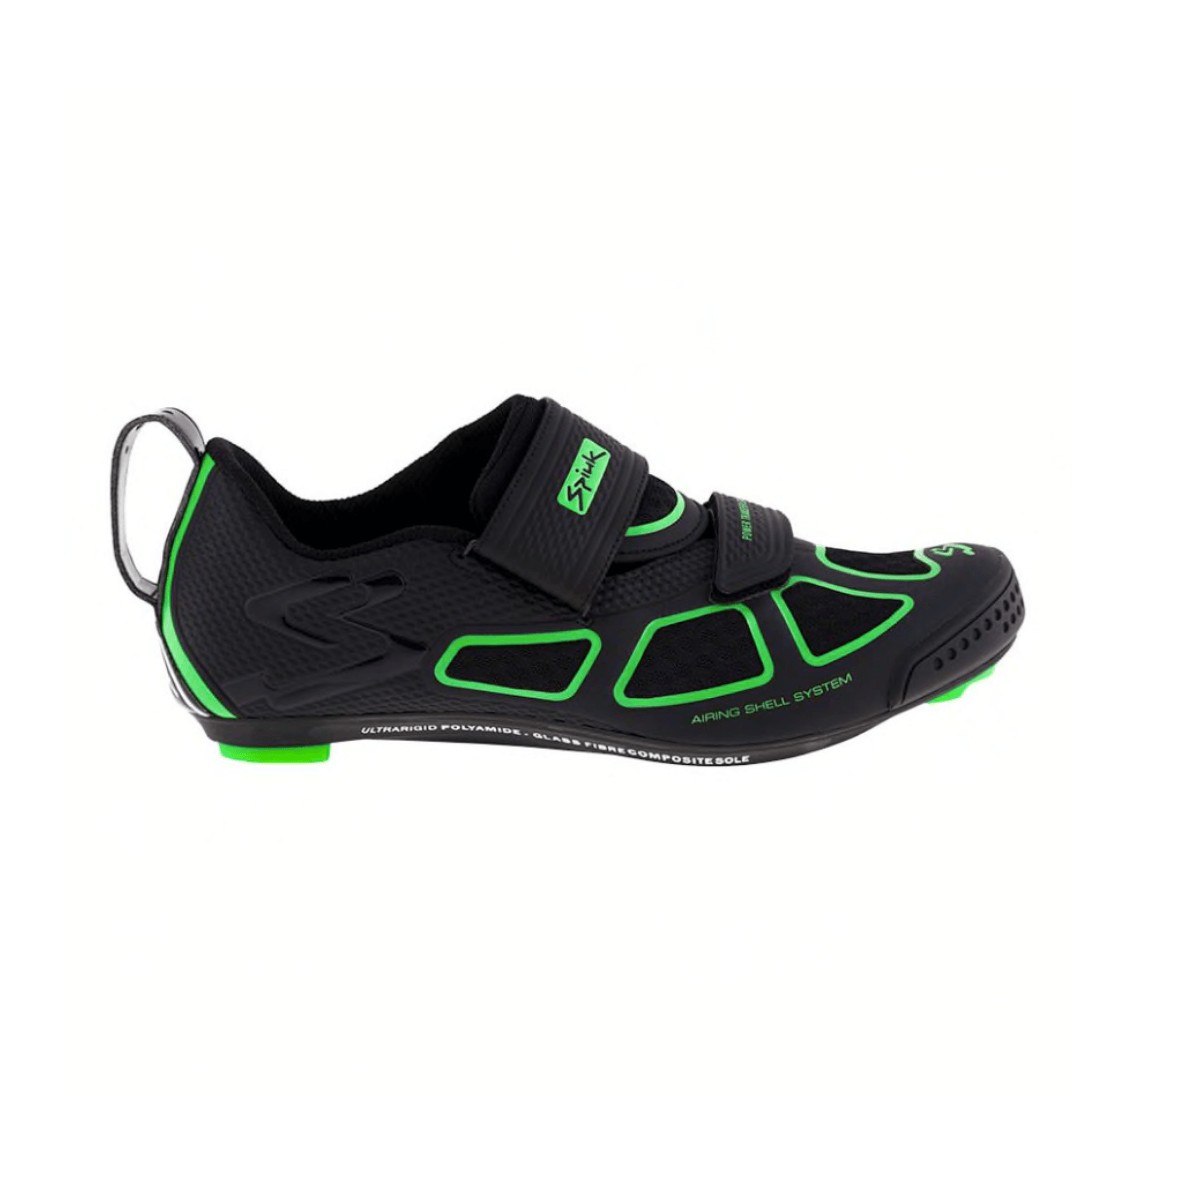 Sapatos Spiuk Trivium Black Green Man, Tamanho 47 - EUR